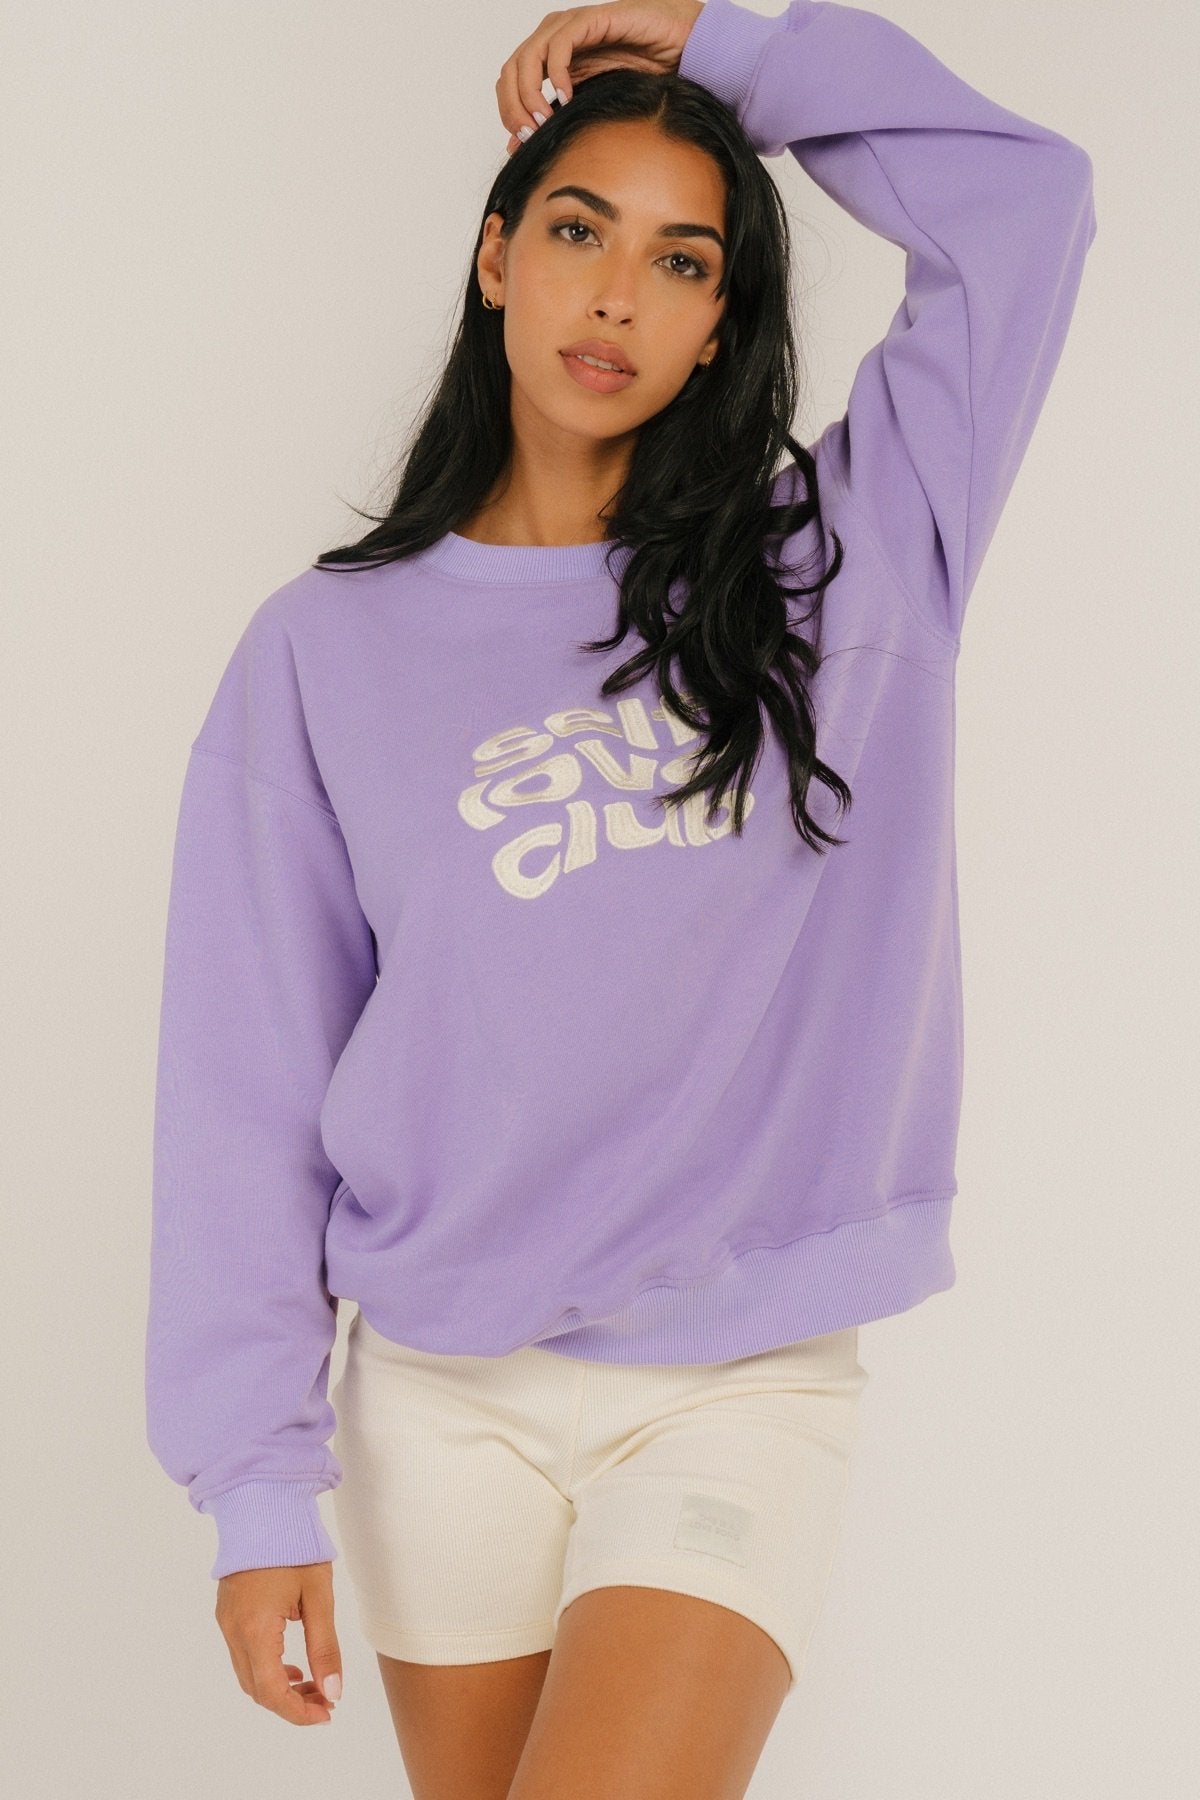 Self Love Club Sweatshirt (Lilac)